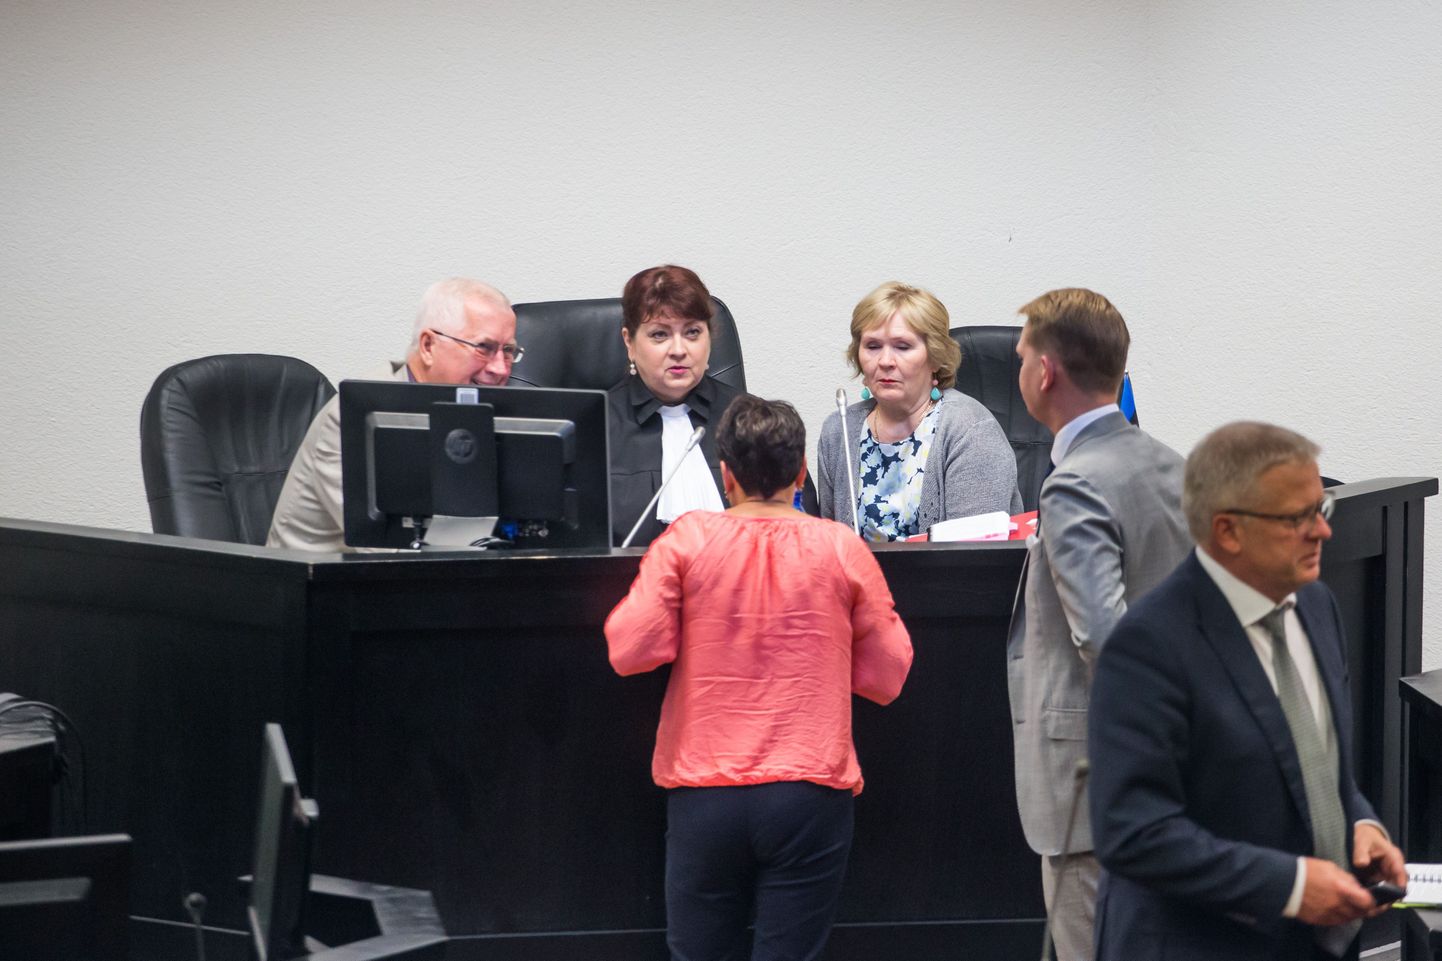 Судебный процесс над Эдгаром Сависааром. Судья Анне Ребане на фото в центре.